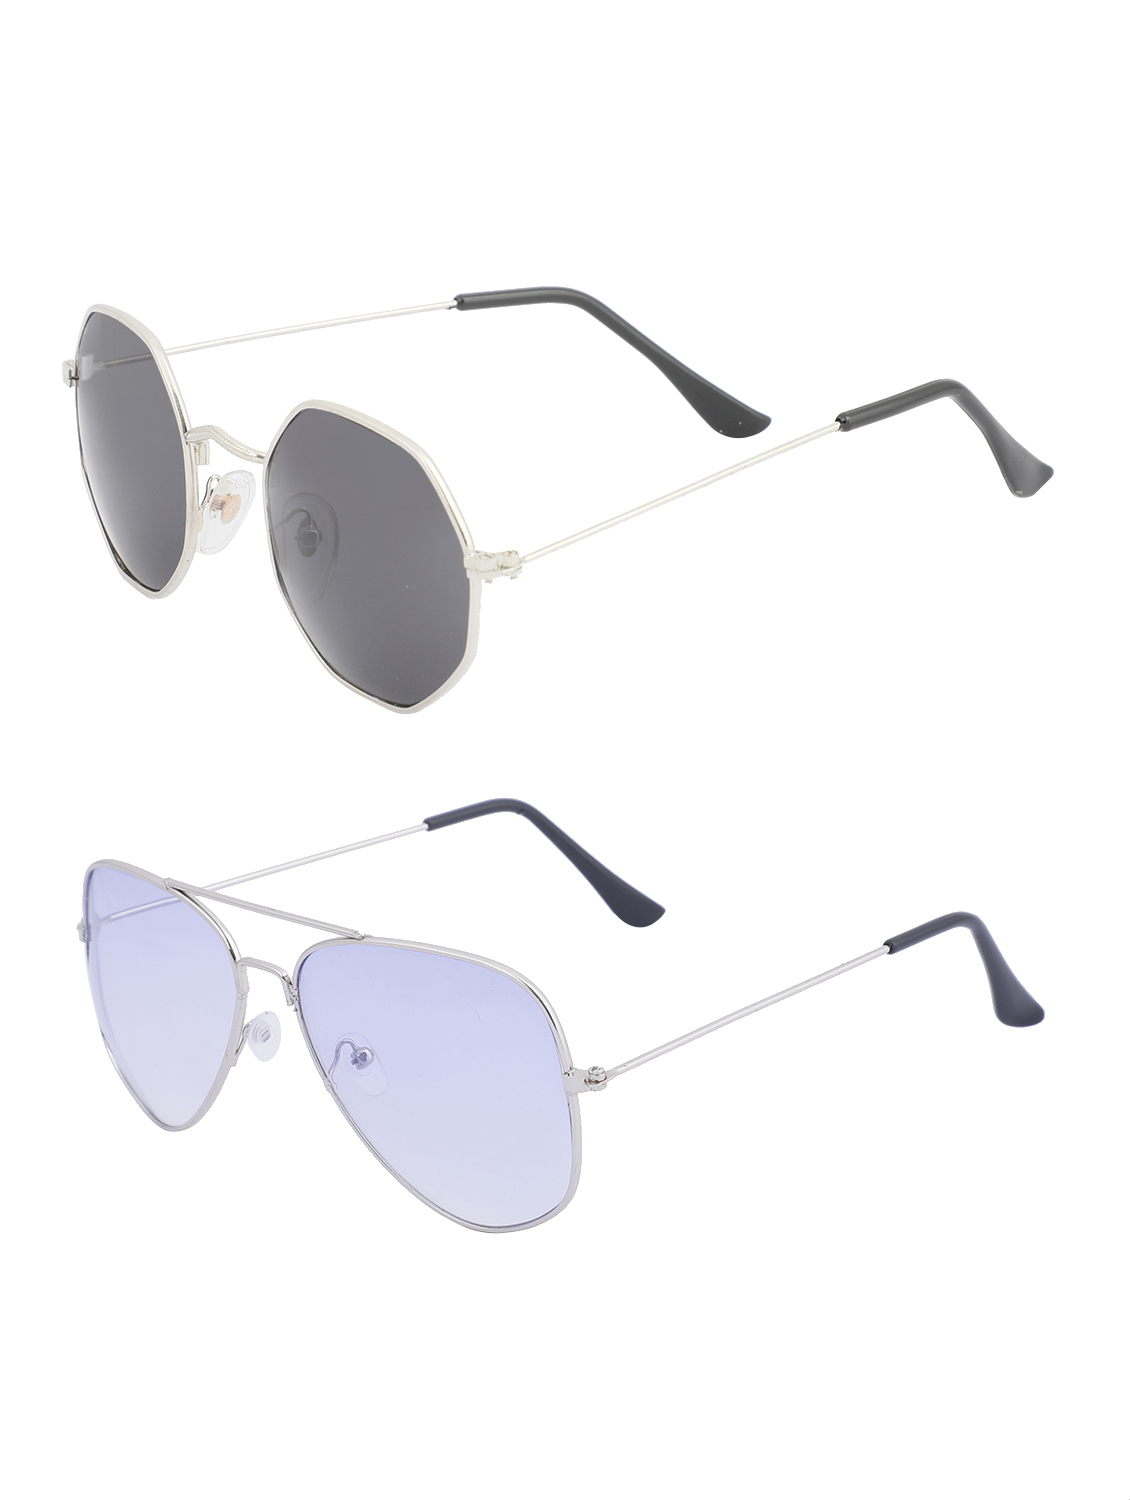 Buy Amora Aviator,Rectangular Sunglasses combo Online @ ₹499 from ShopClues